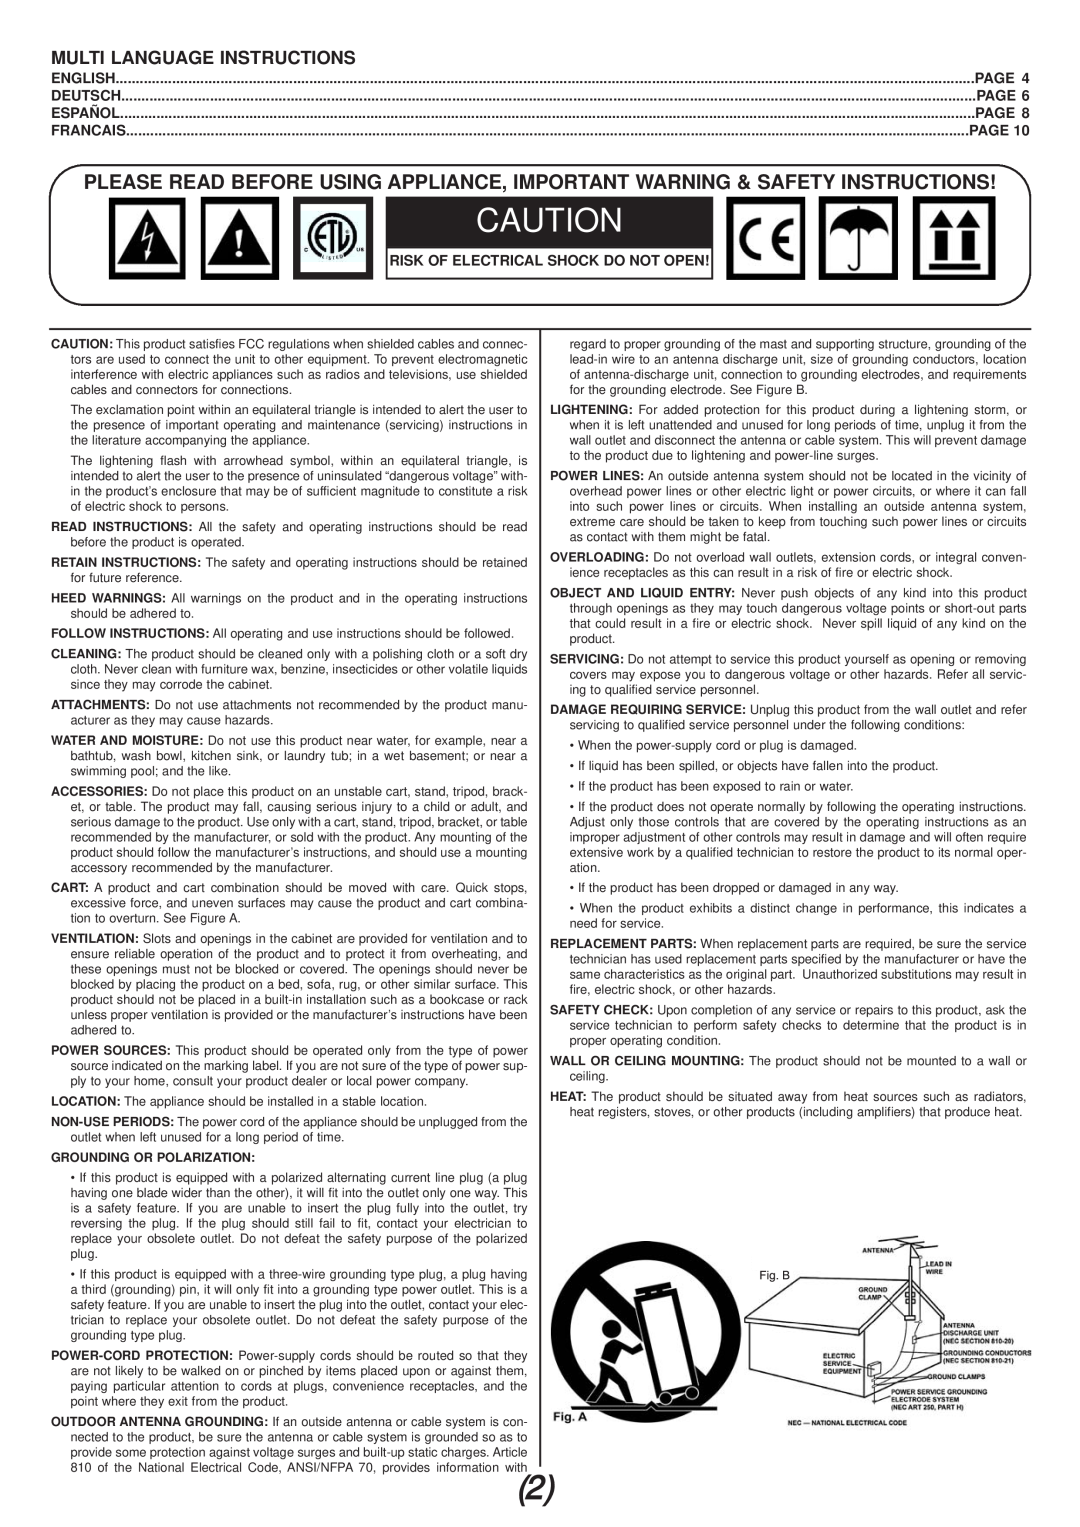 Gemini iTT manual Multi Language Instructions, Page, Risk Of Electrical Shock Do Not Open 